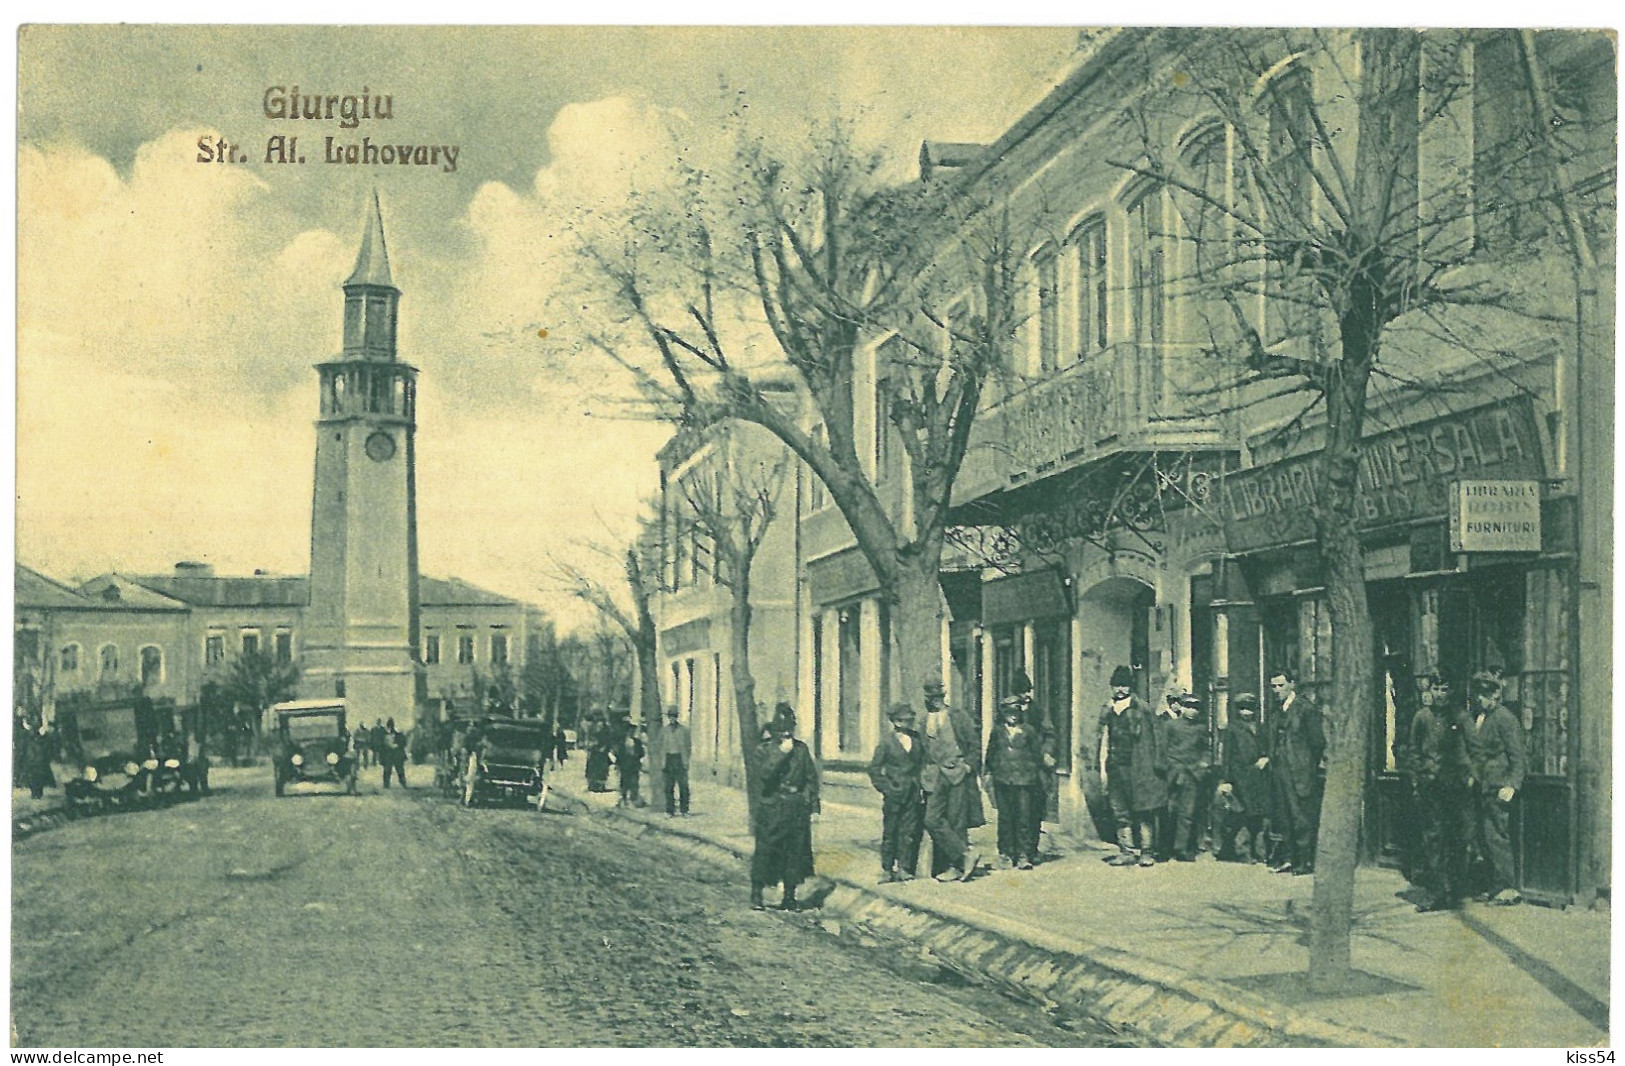 RO 83 - 23689 GIURGIU, Firemen Tower, Stret Stores, Romania - Old Postcard - Used - 1928 - Rumänien